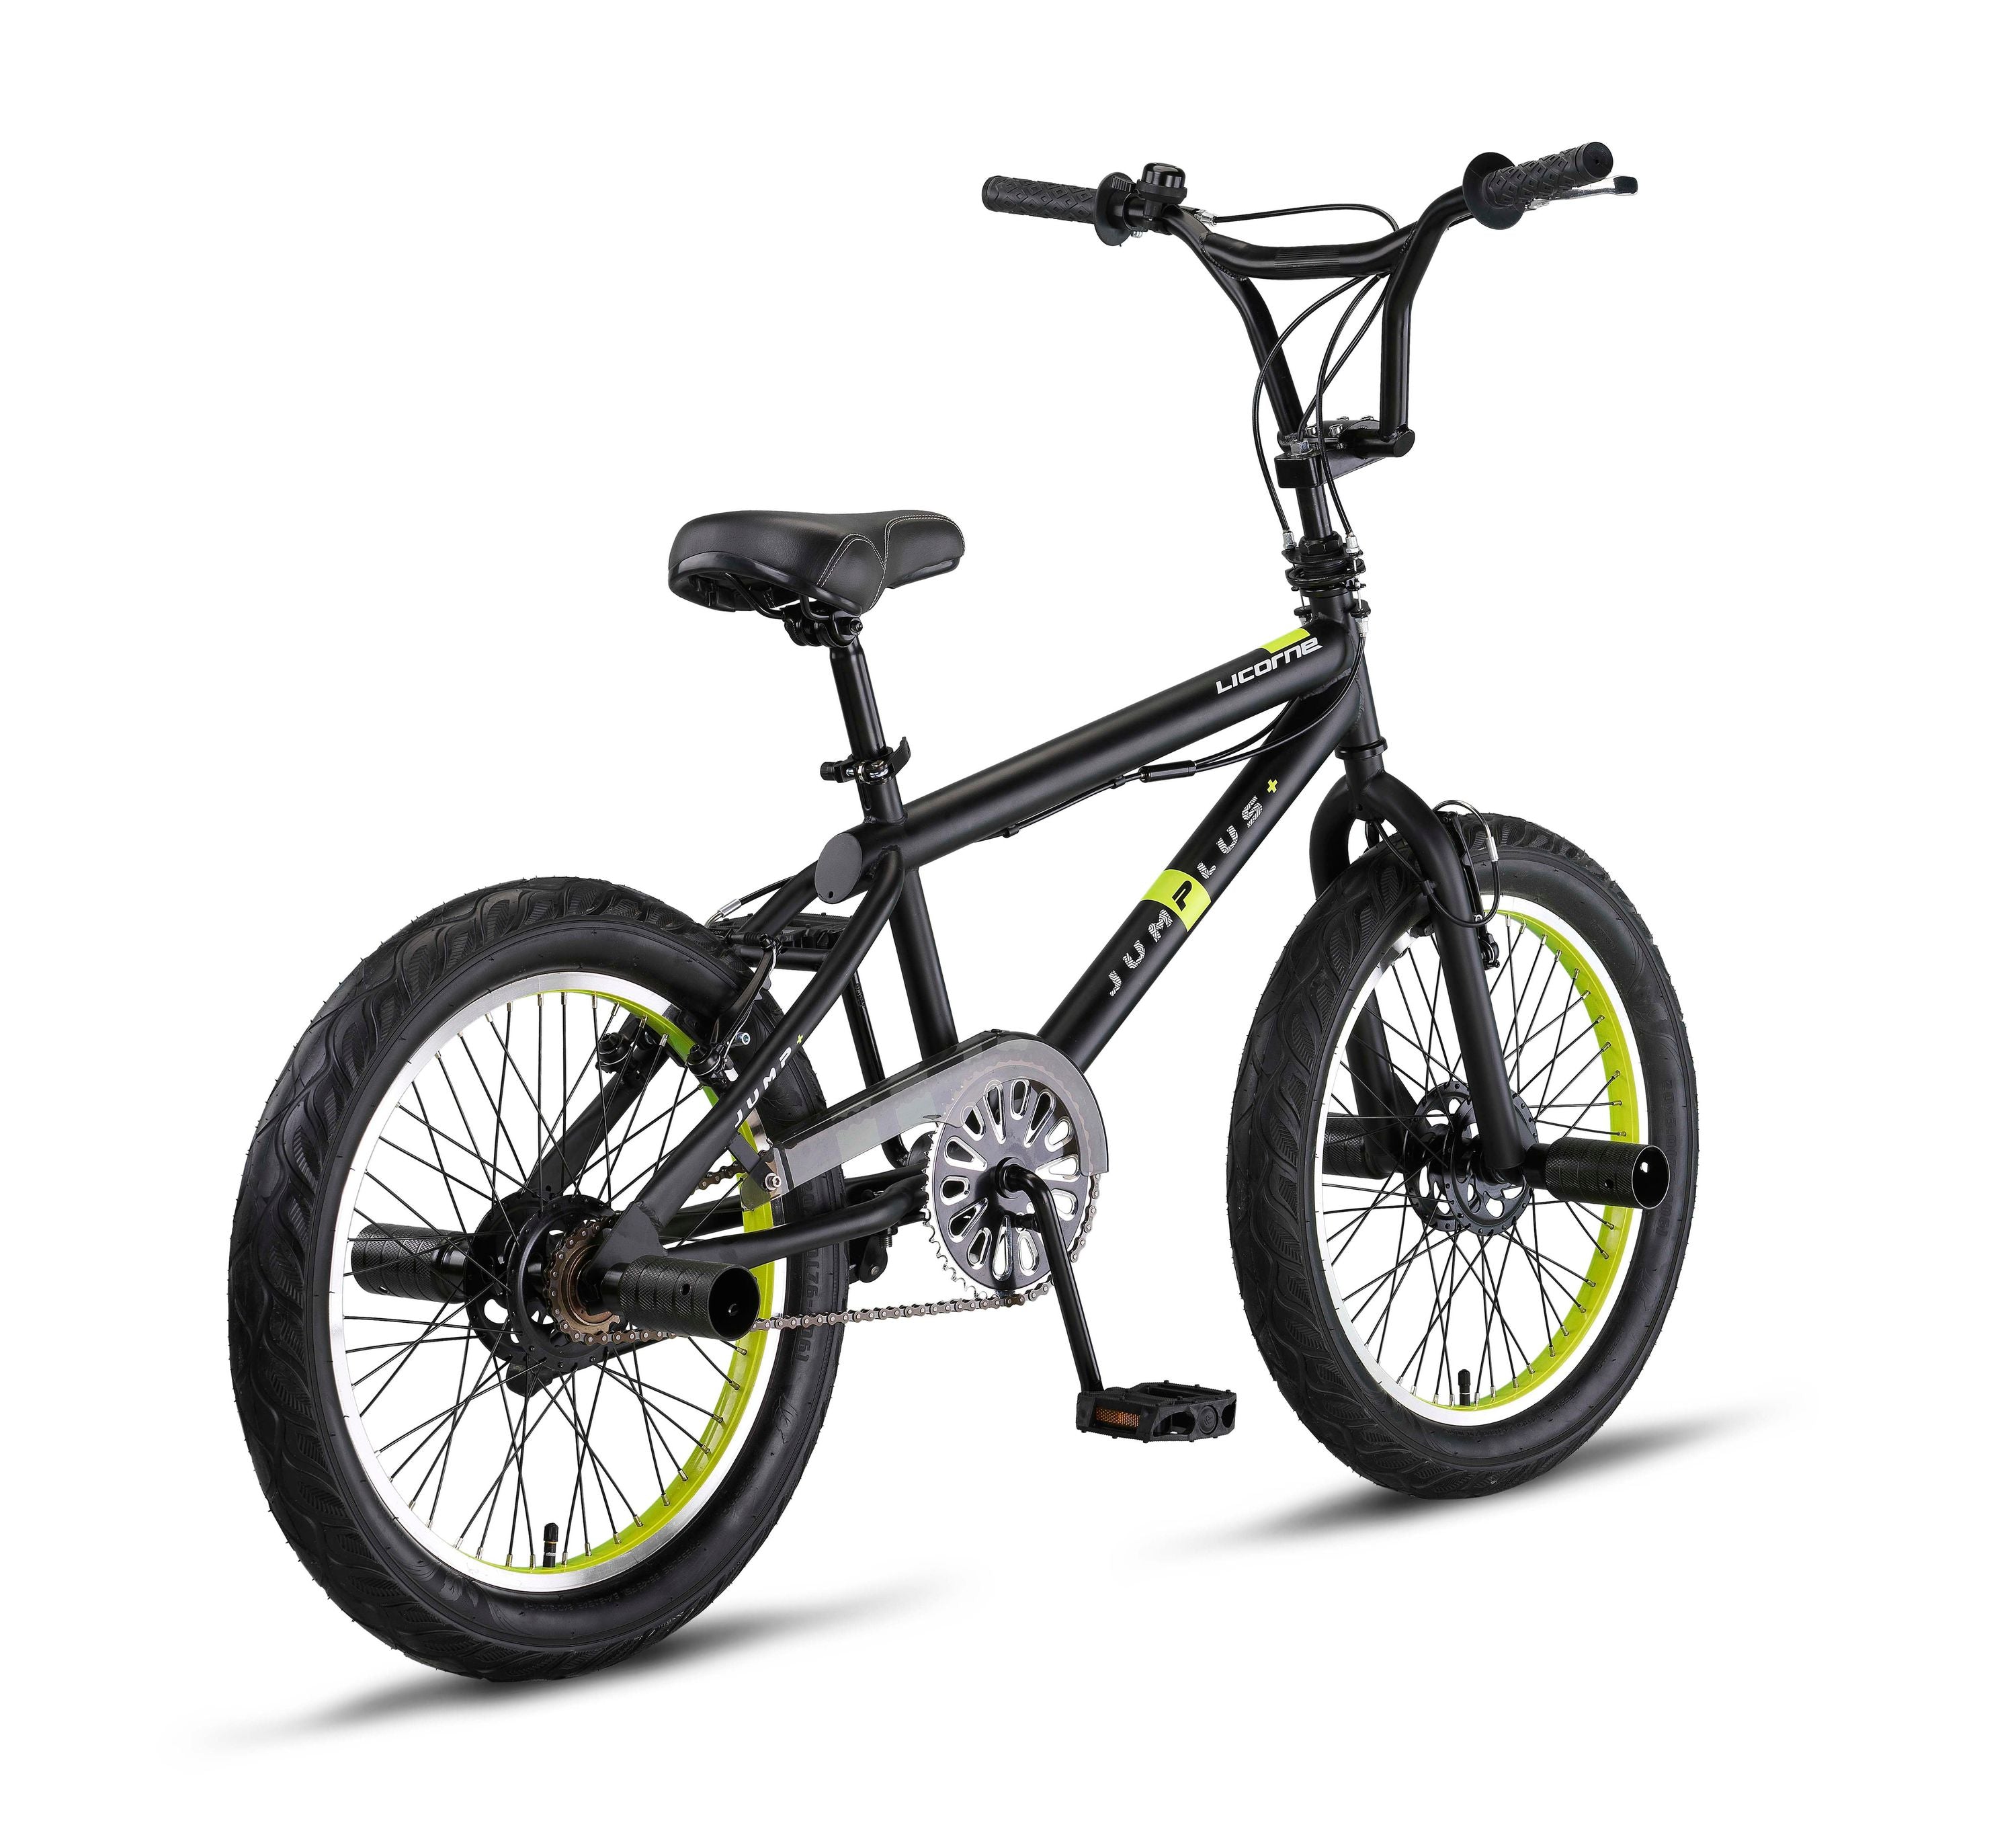 Licorne Bike Jump Premium BMX Sistema a rotore a 360°, 4 pioli in acciaio, paracatena, ruota libera